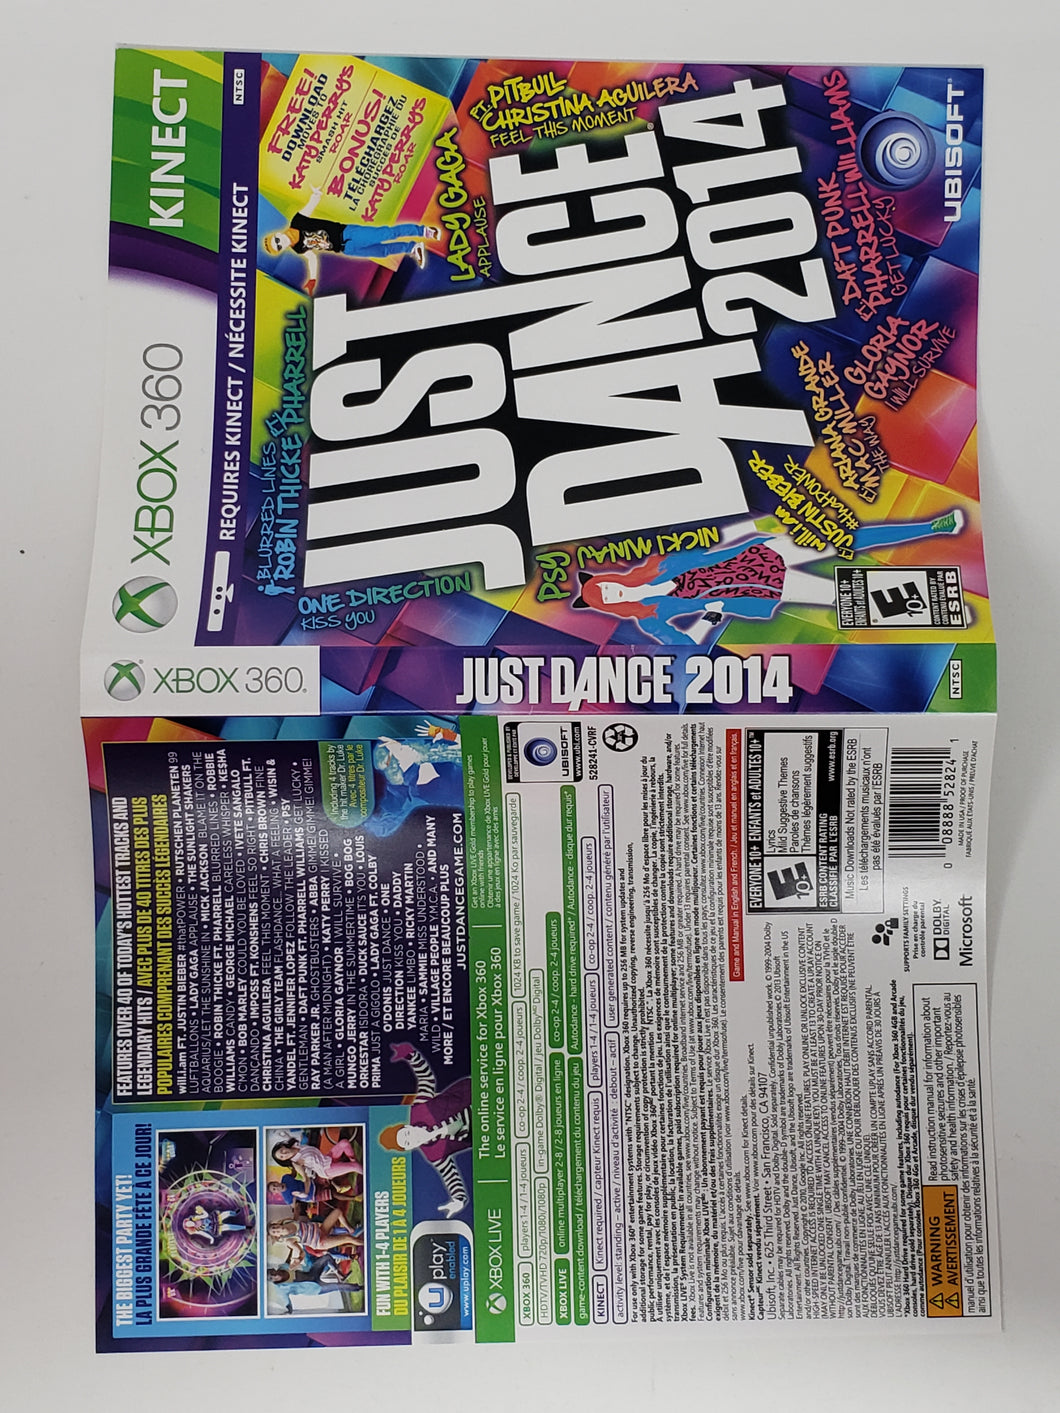 Just Dance 2014 [Cover art] - Microsoft XBOX 360